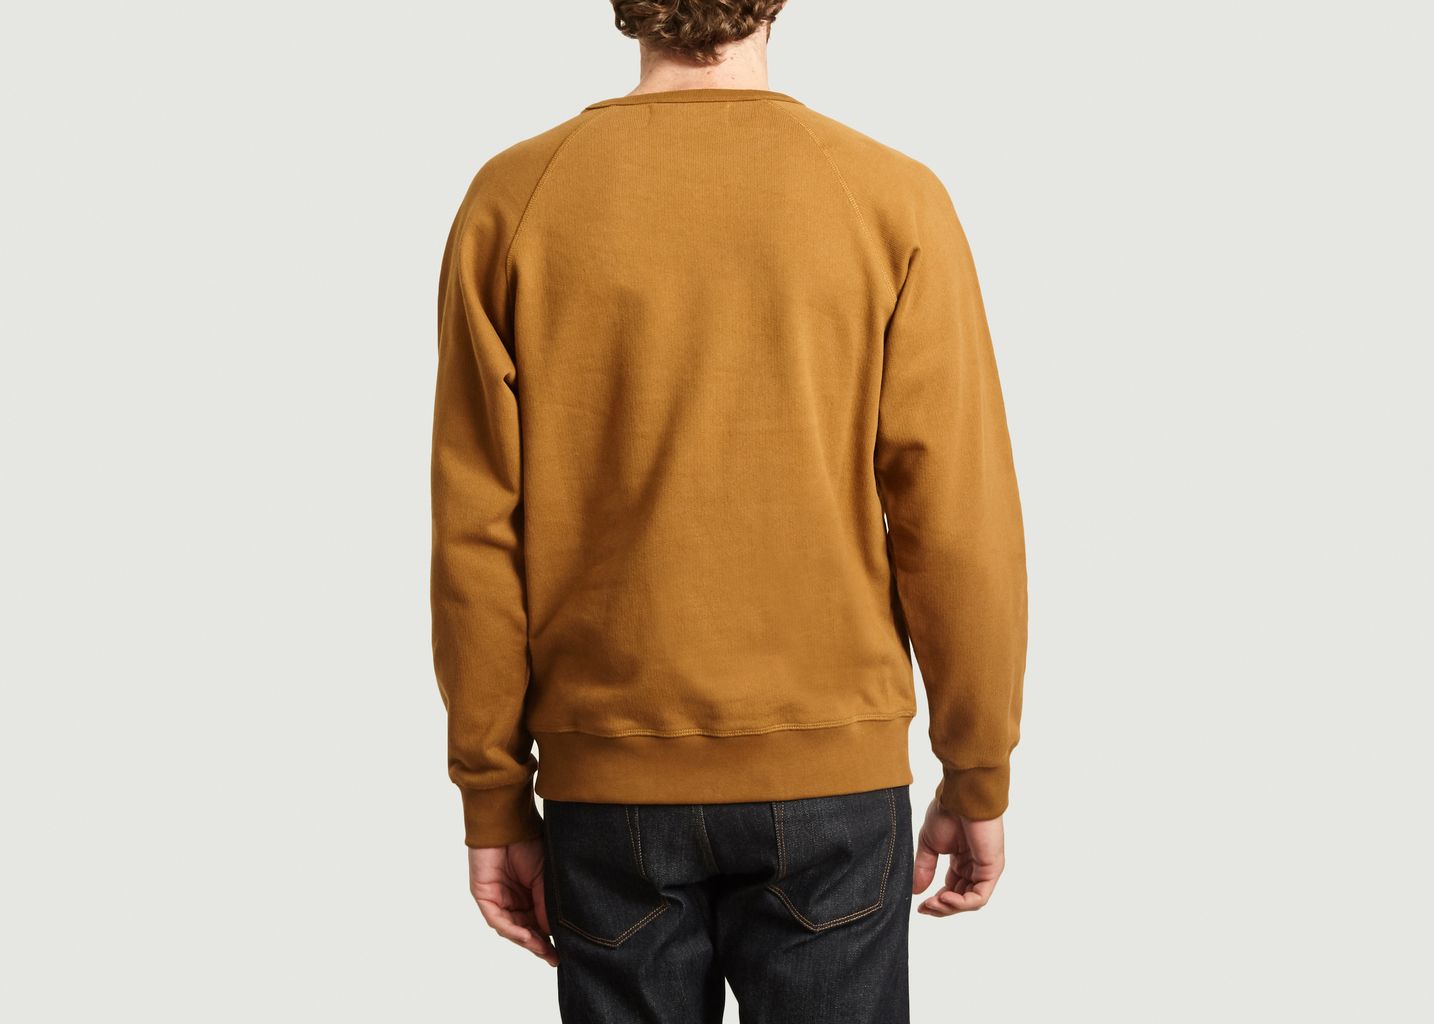 Basic cotton sweatshirt - Outland